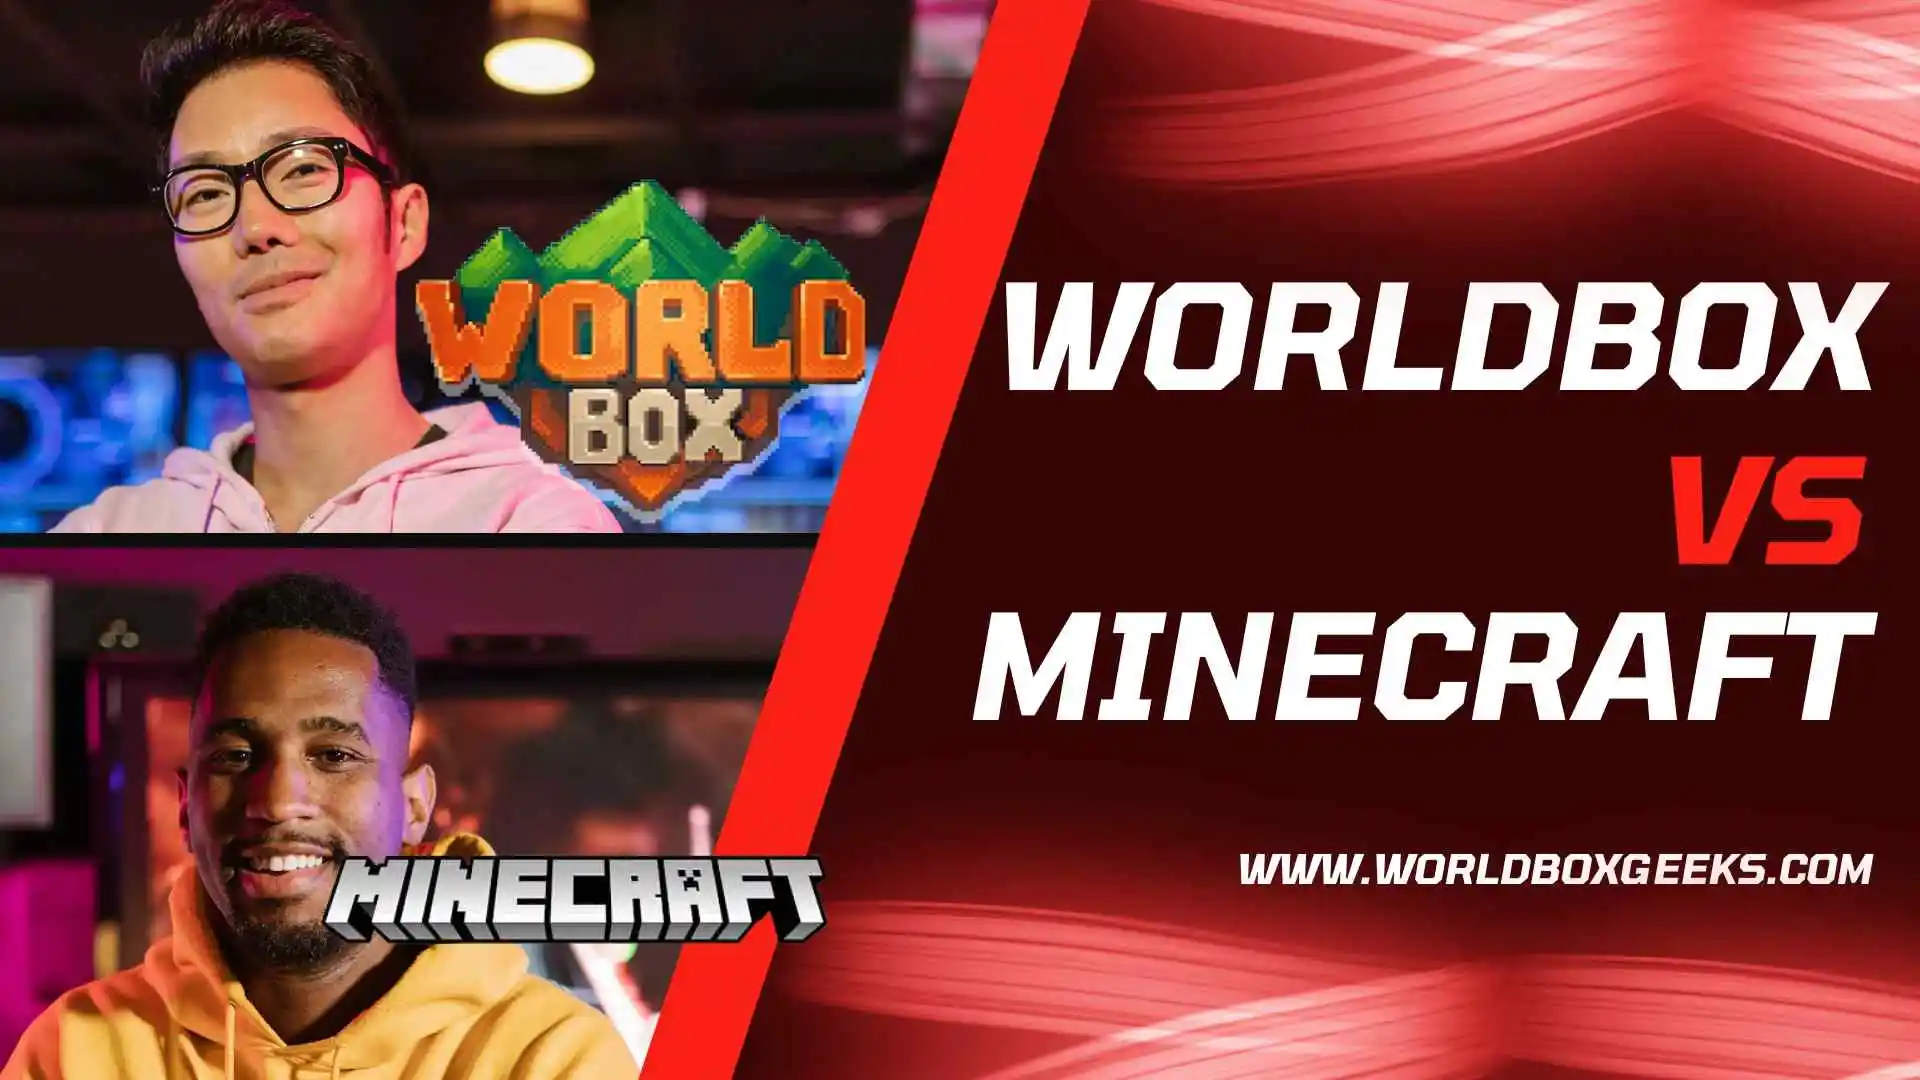 Worldbox vs minecraft